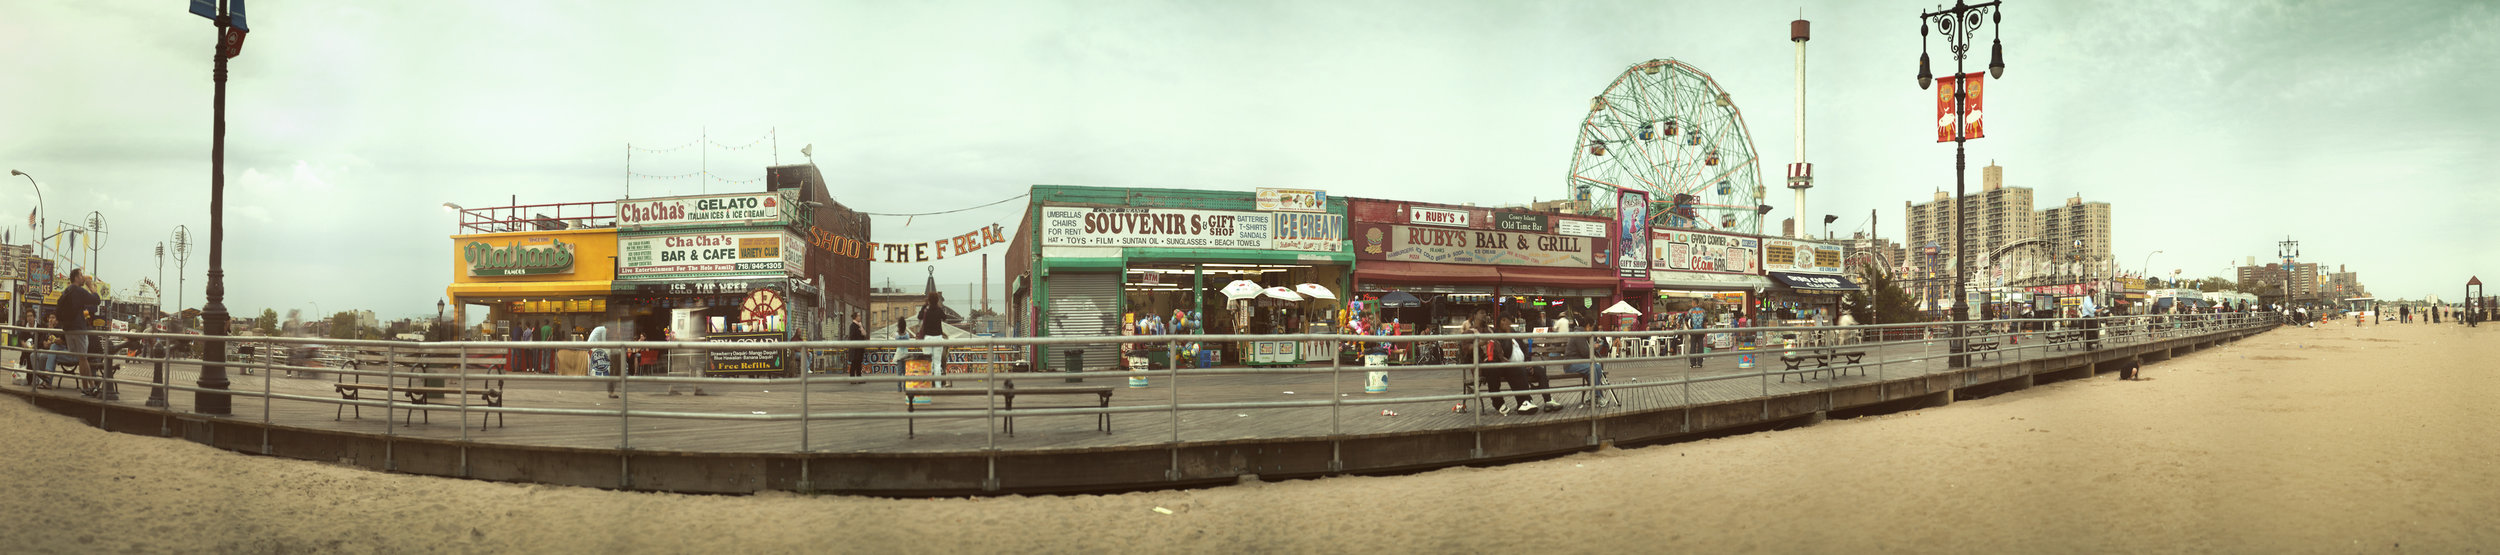 Coney Island-10.jpg